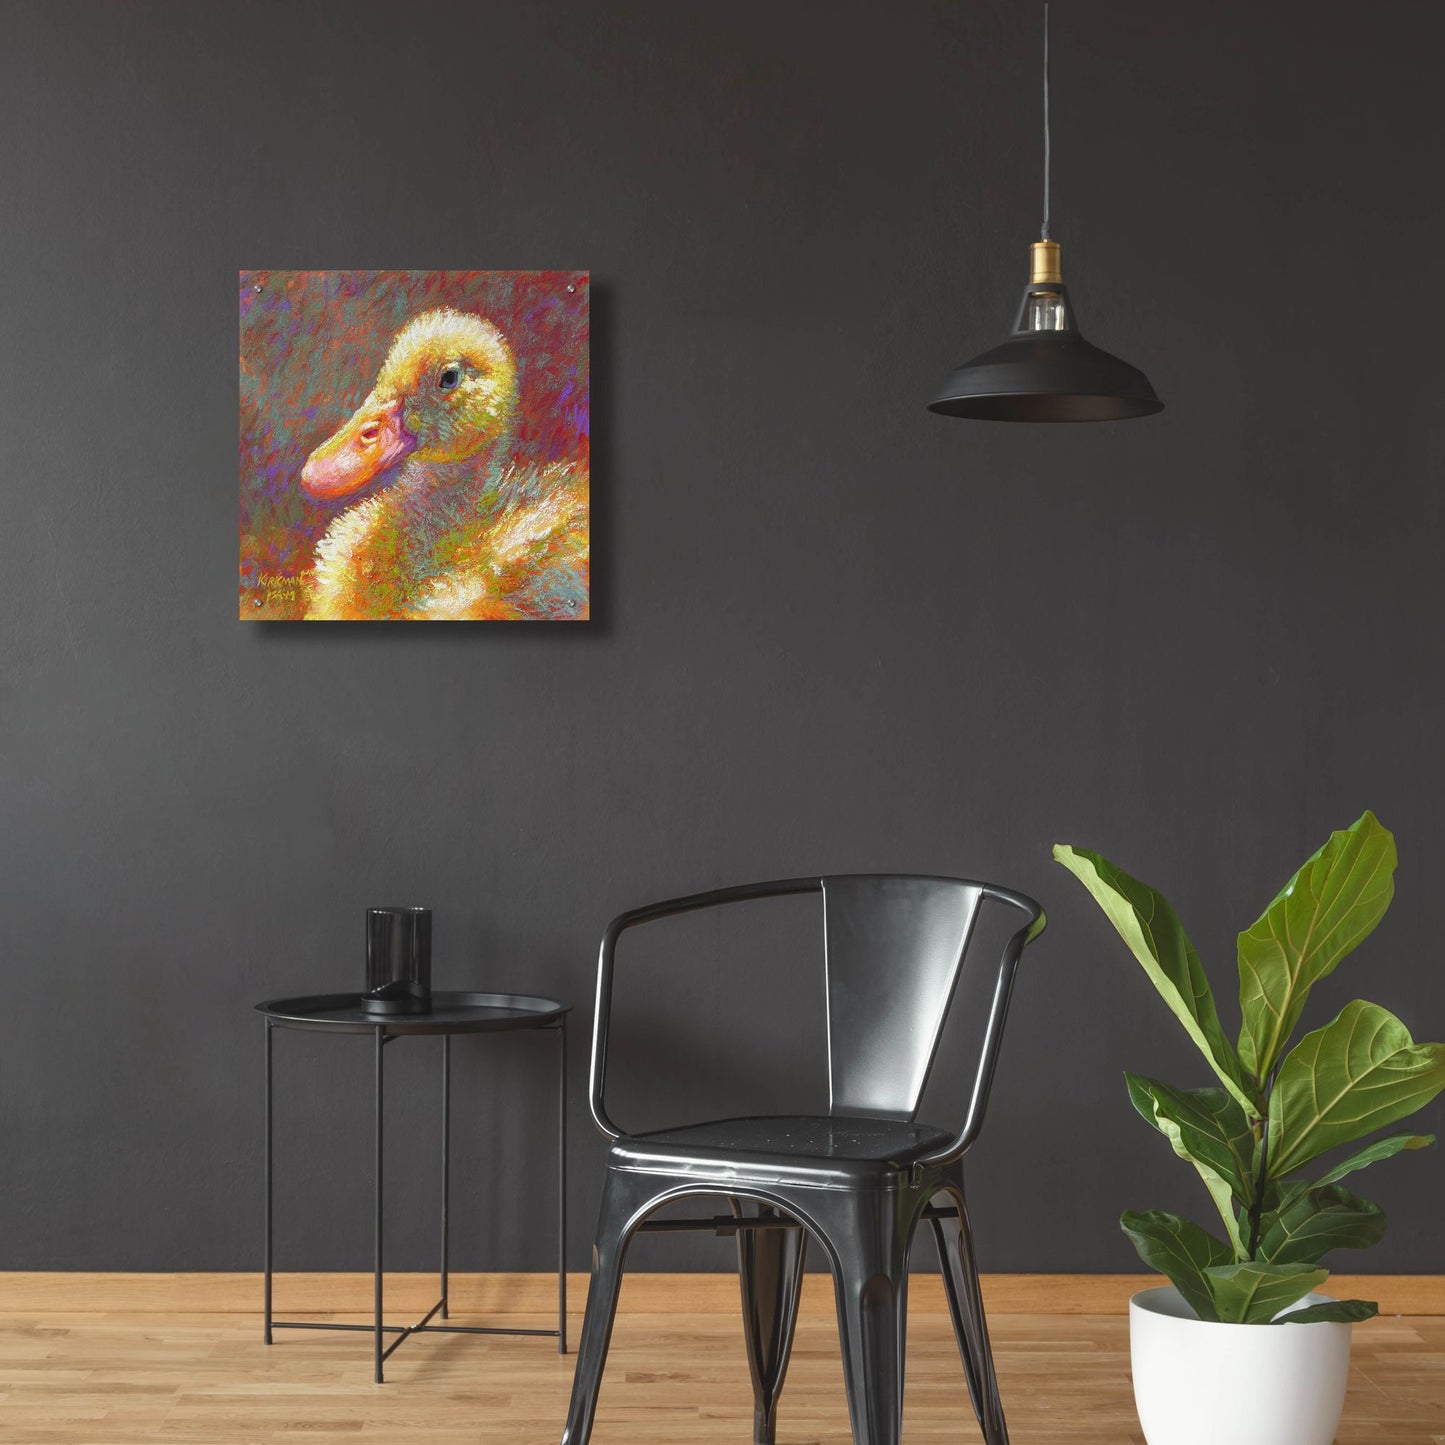 Epic Art 'Ducky 2 by Rita Kirkman, Acrylic Glass Wall Art,24x24